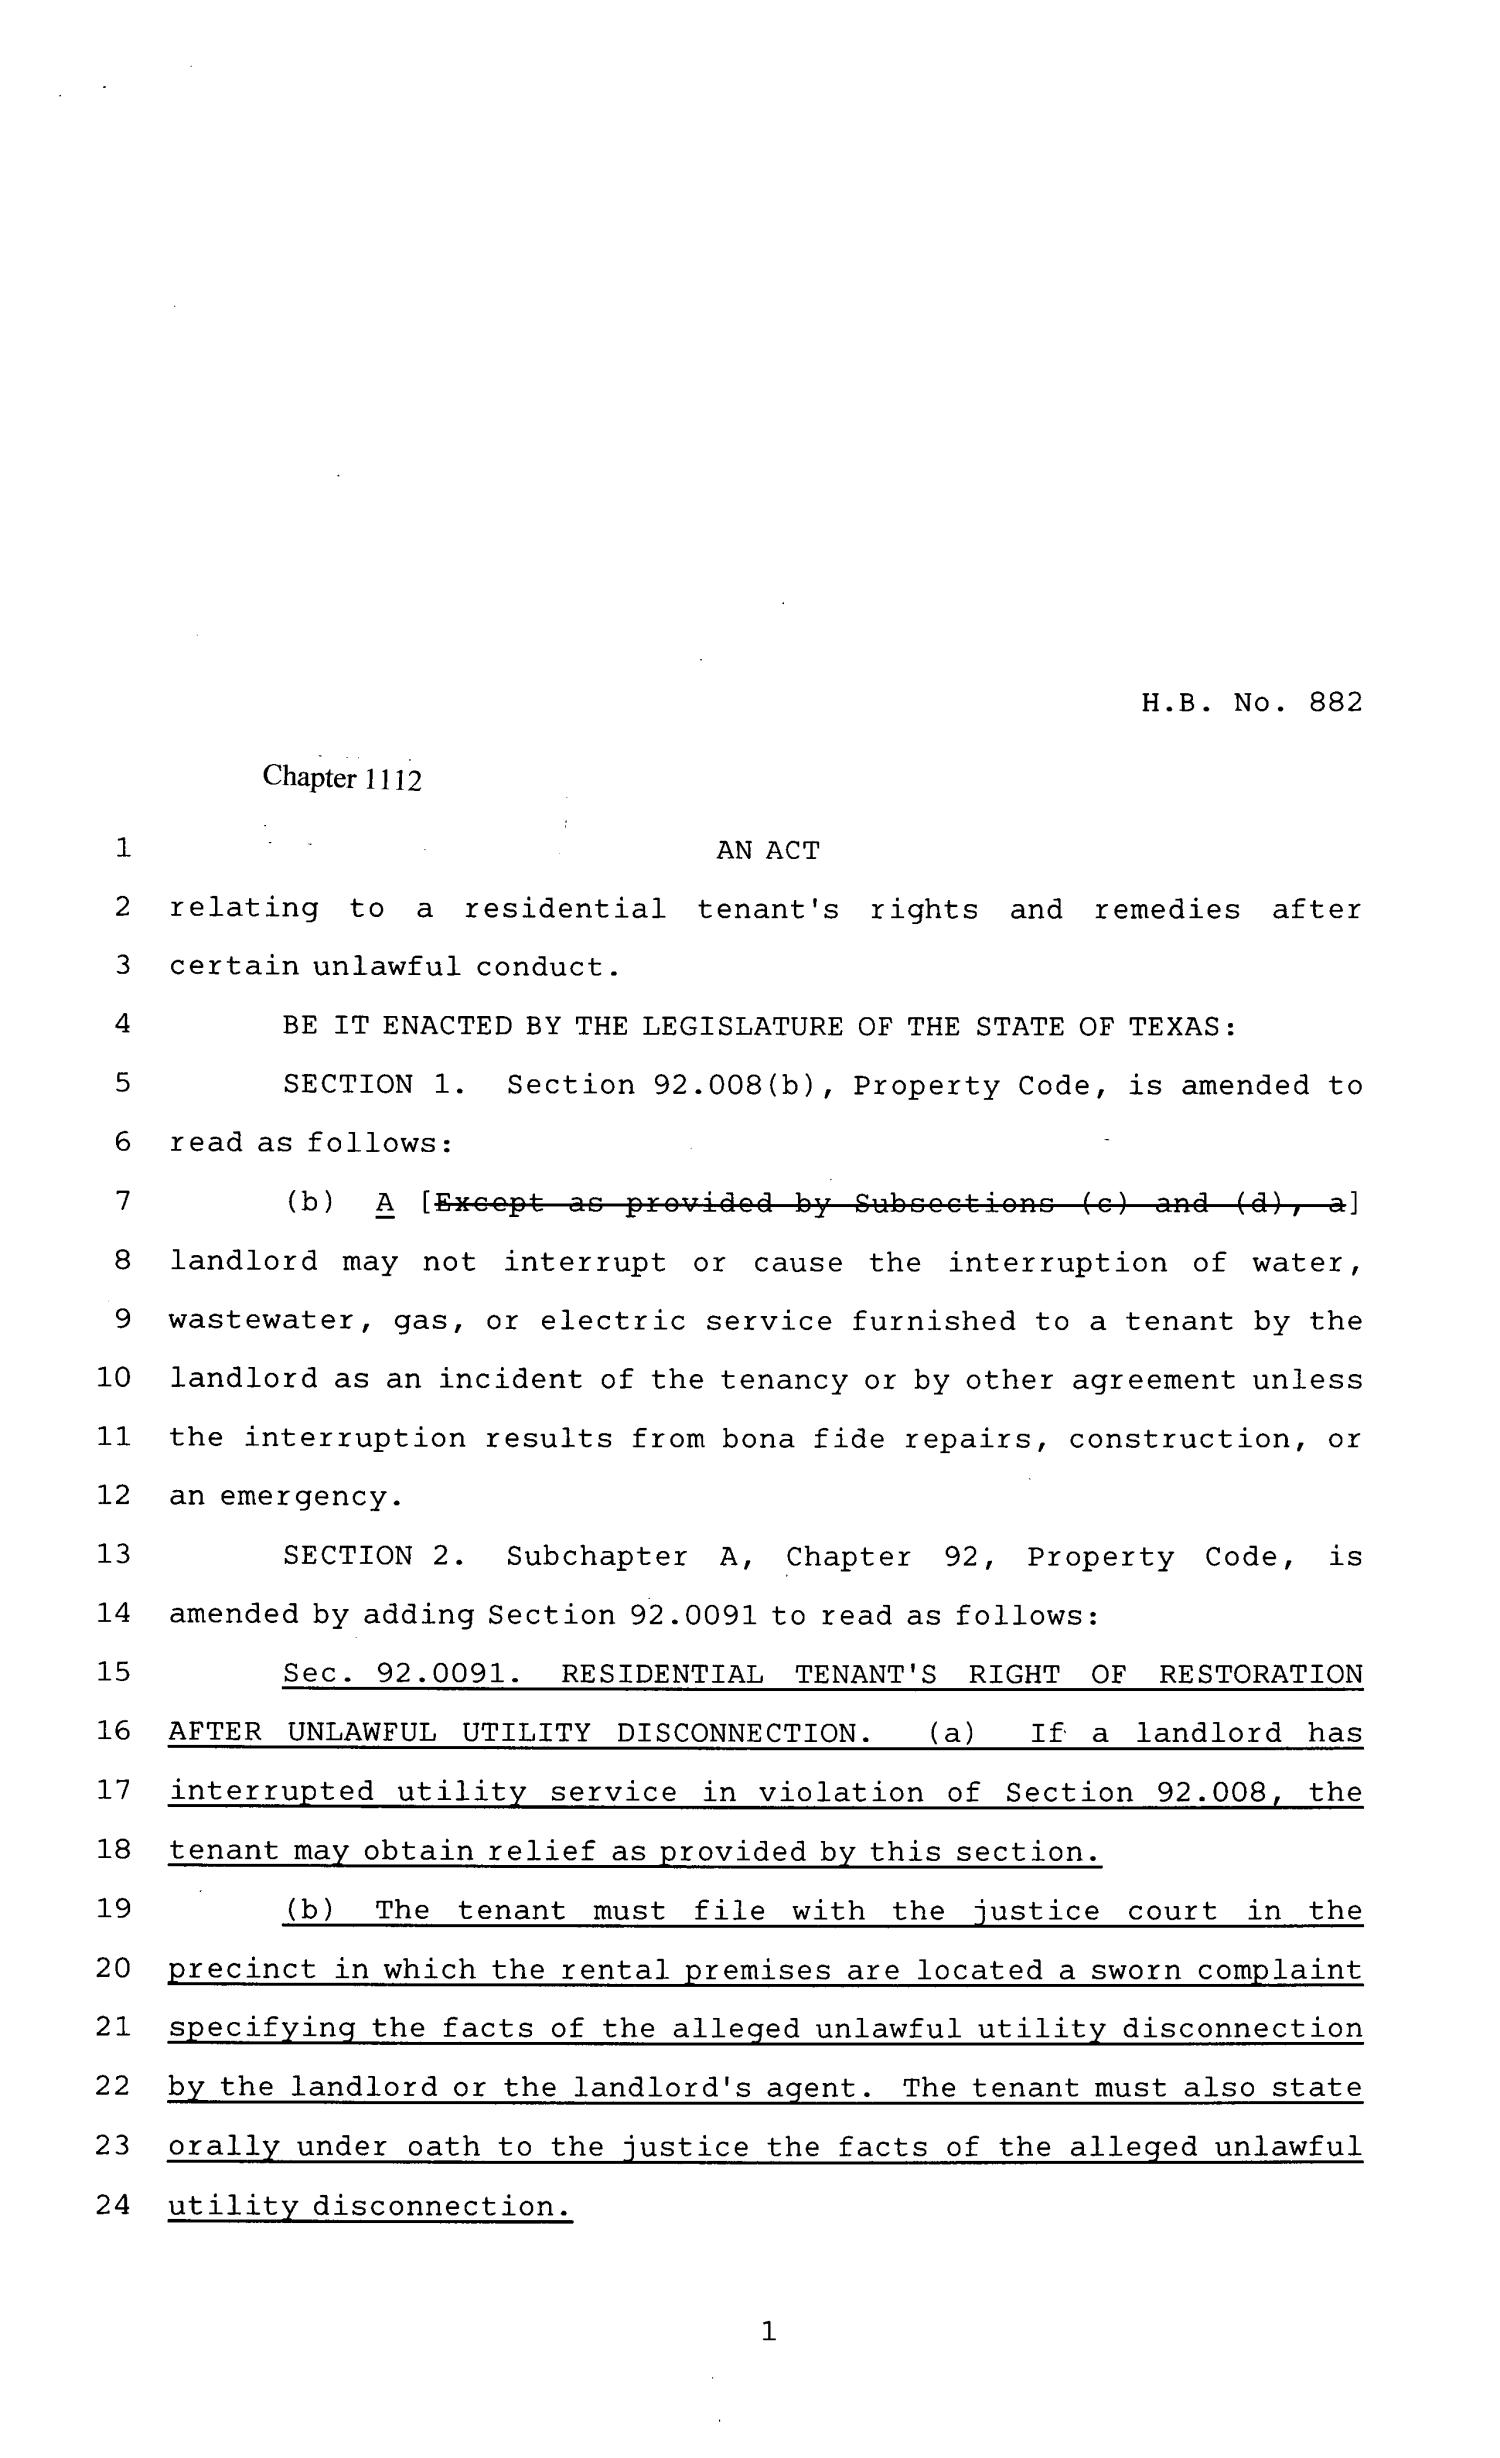 81st Texas Legislature, Regular Session, House Bill 882, Chapter 1112
                                                
                                                    [Sequence #]: 1 of 6
                                                